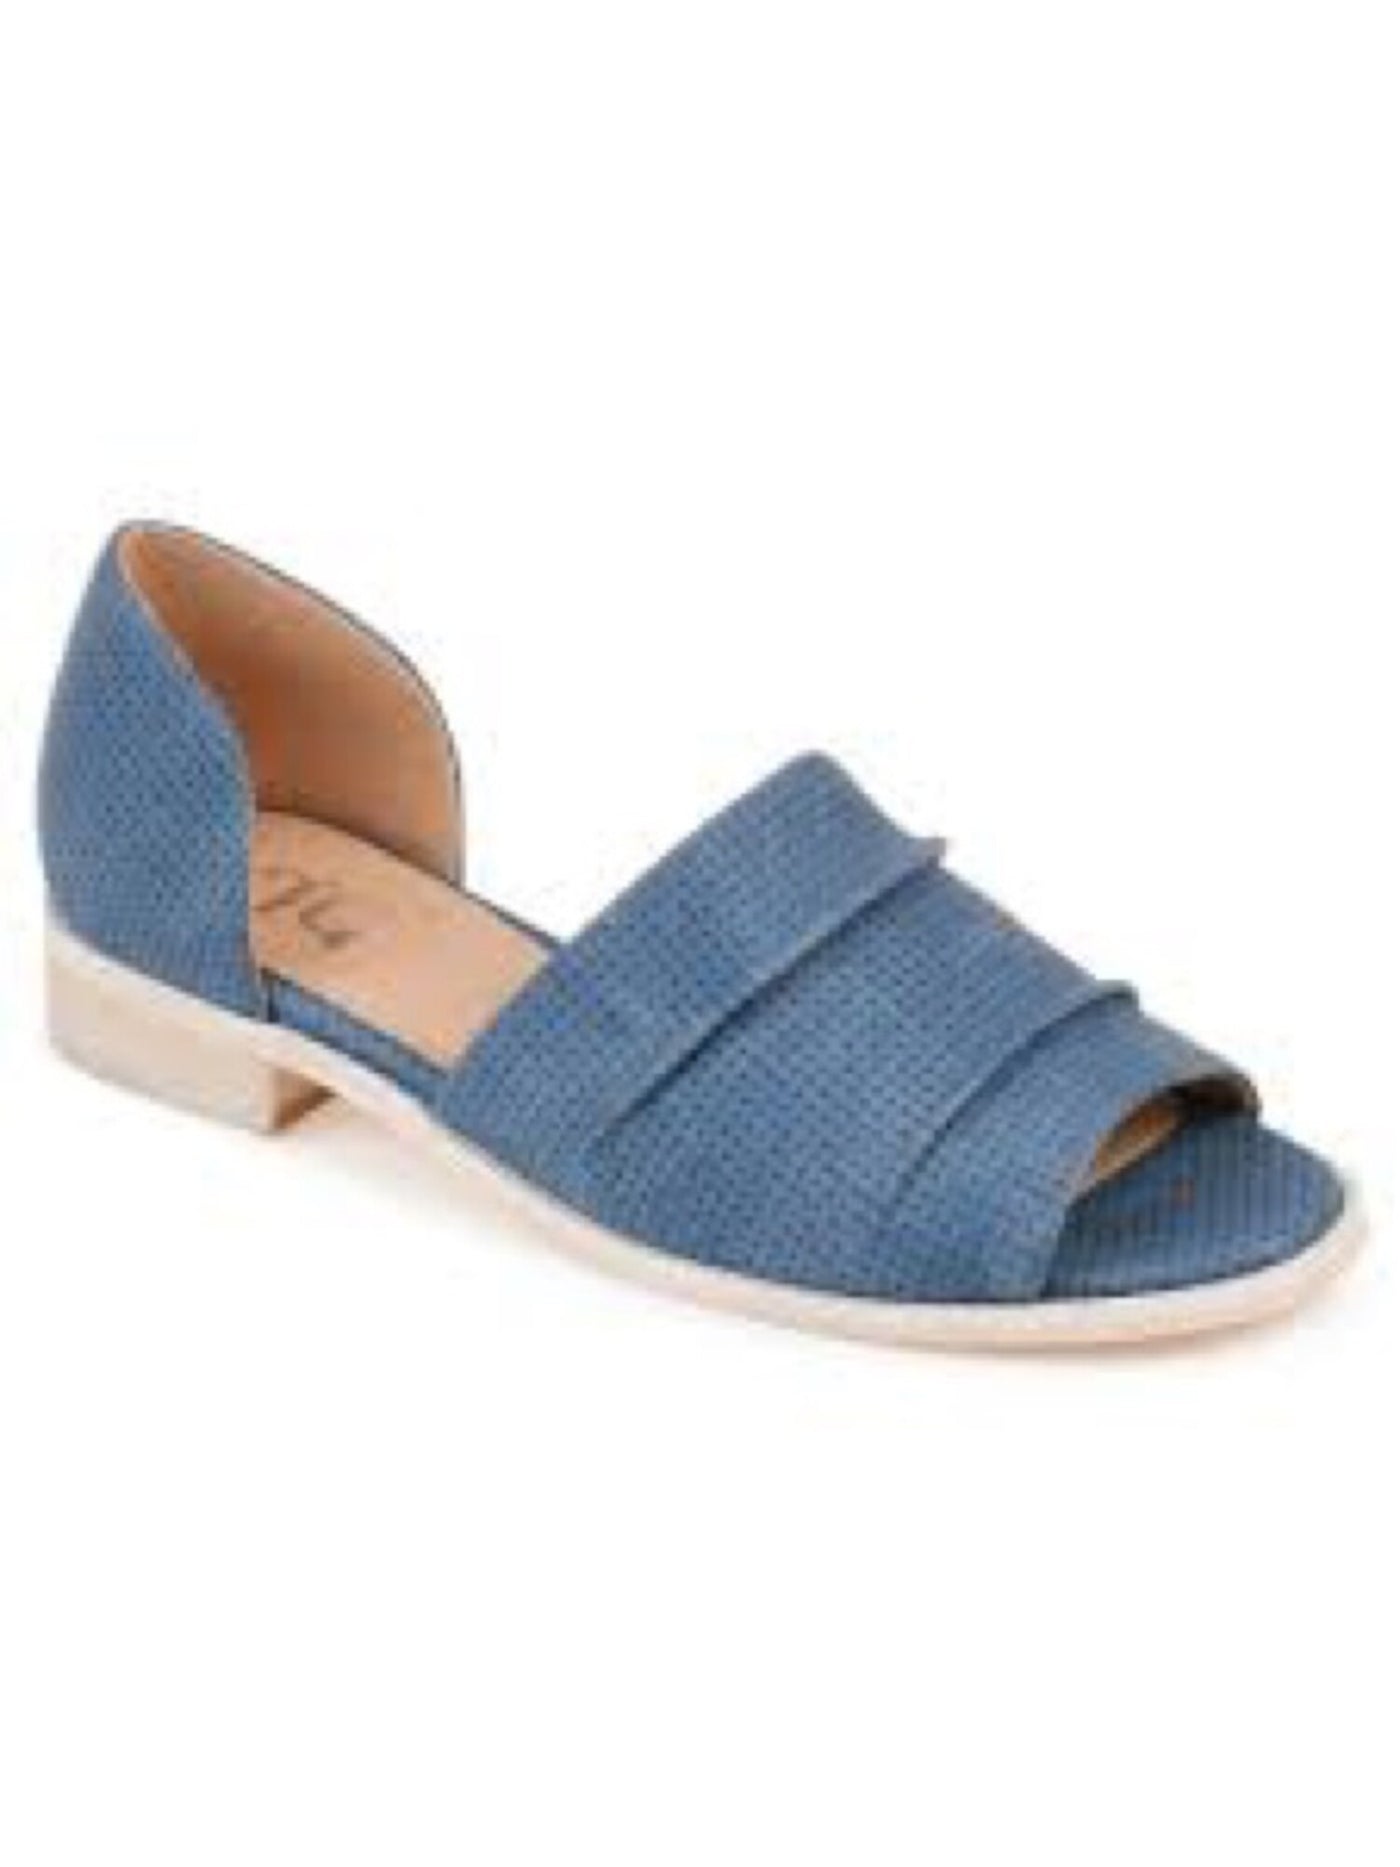 JOURNEE COLLECTION Womens Blue Pinhole Look Cushioned Helena Open Toe Block Heel Slip On Flats Shoes 7.5